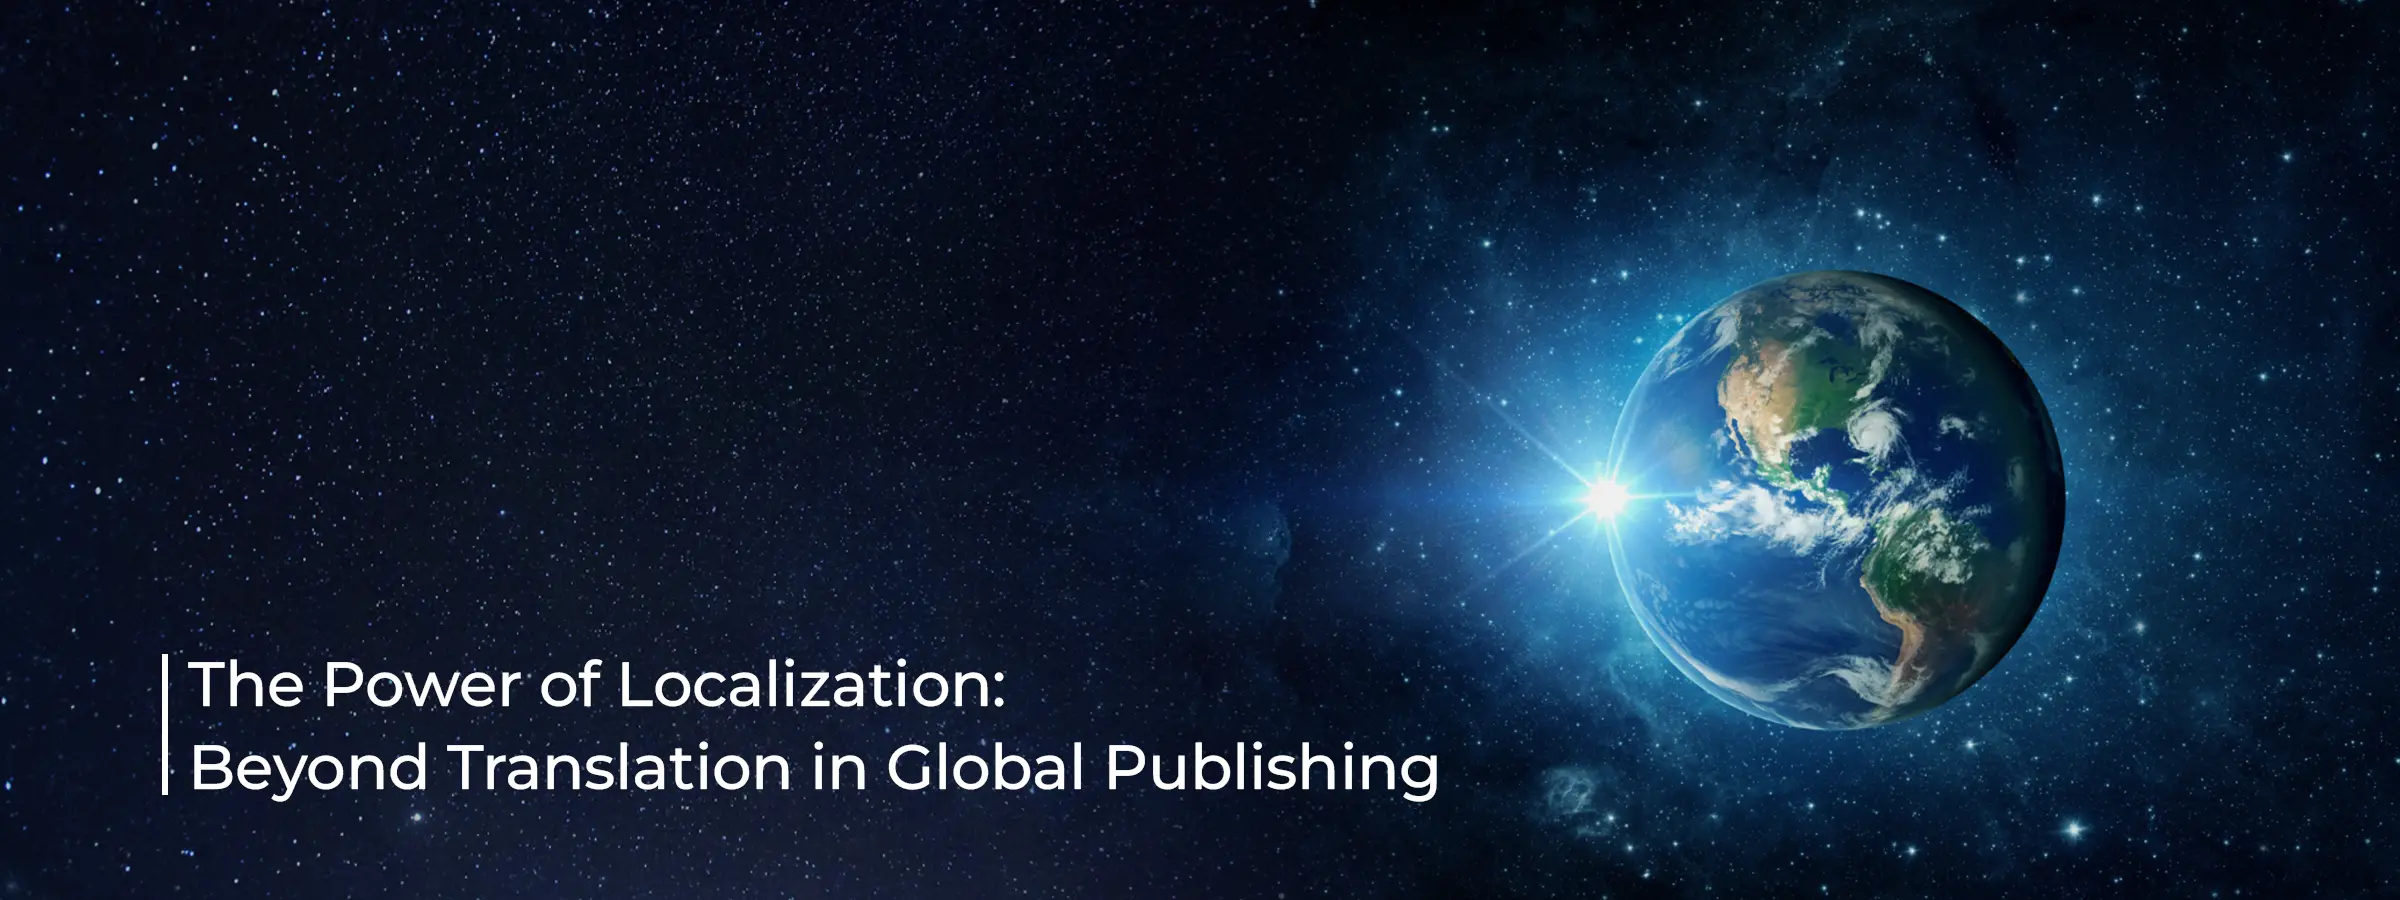 localization-beyond-translation-in-global-publishing